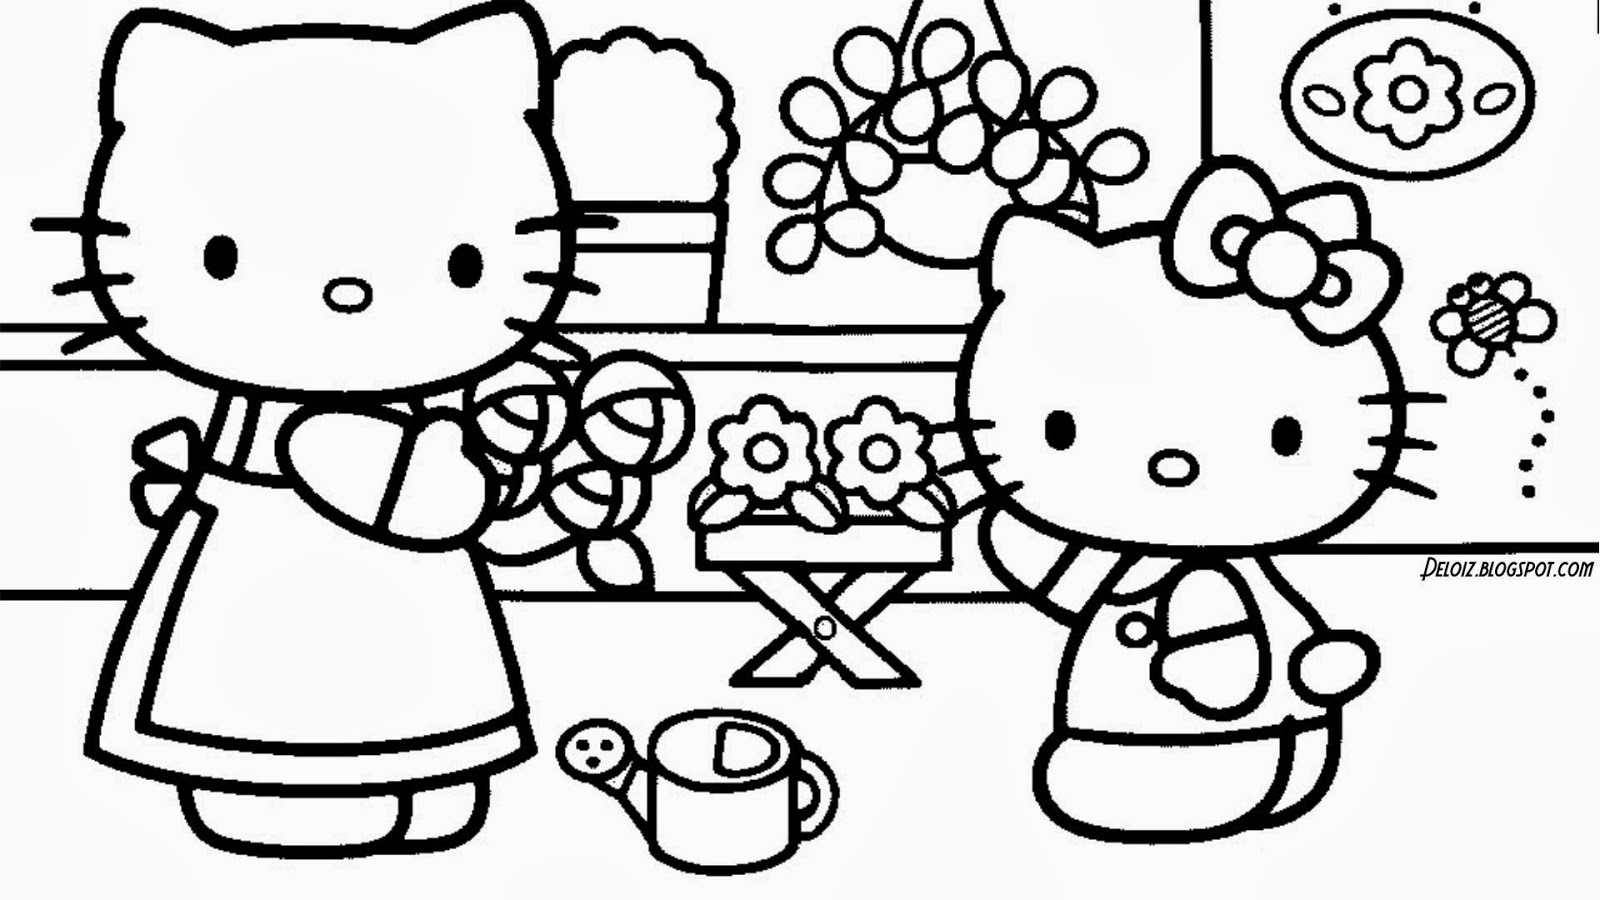 Gambar Hello Kitty Untuk Diwarnai Terbaru Deloiz Wallpaper